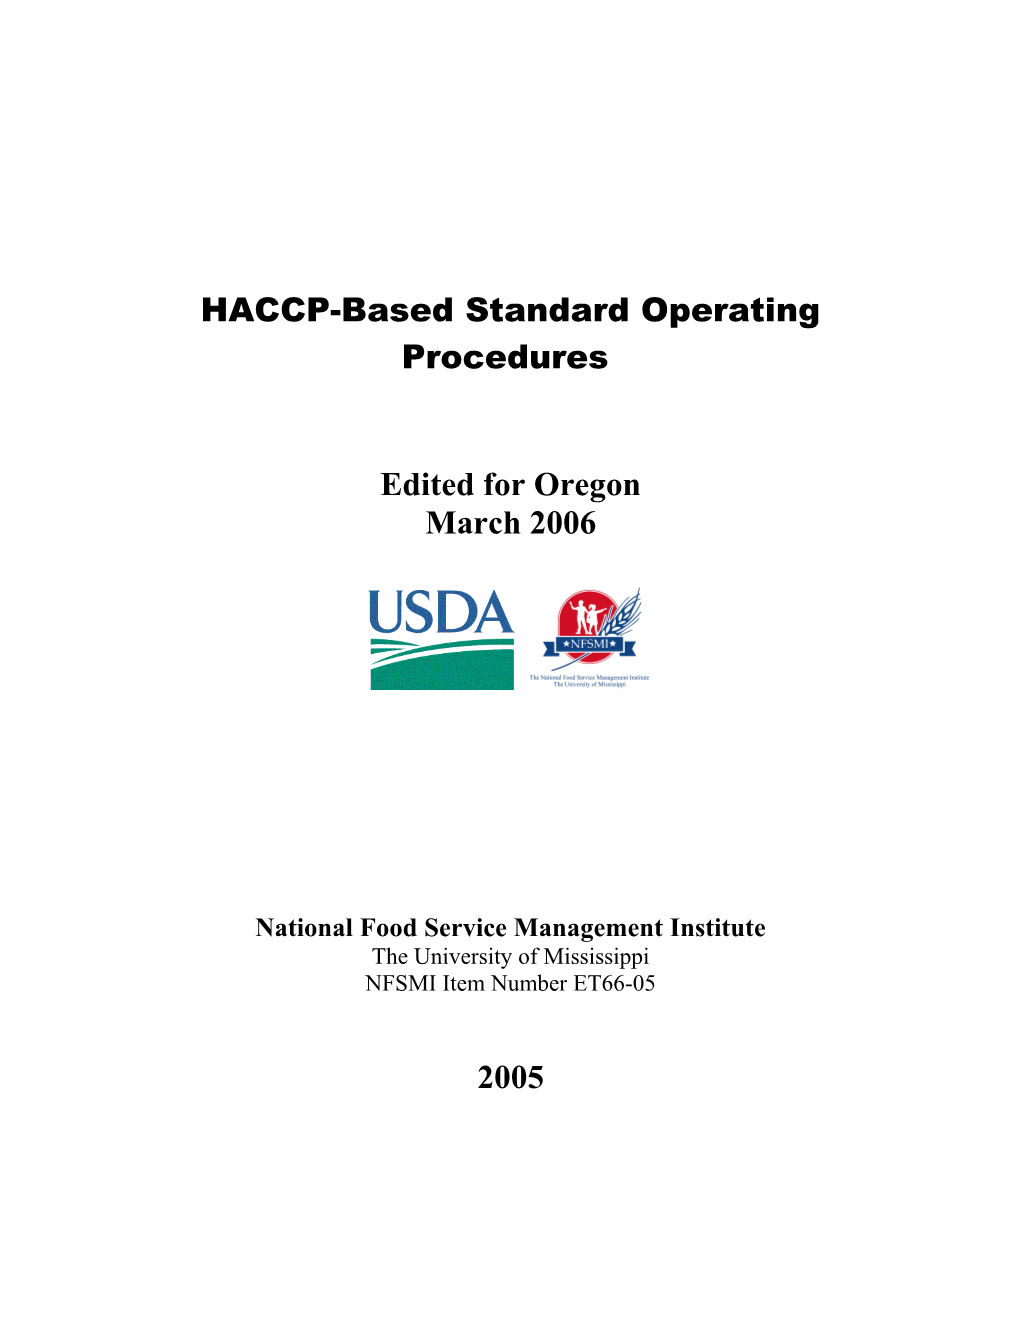 HACCP-Based Standard Operating Procedures (Sops)